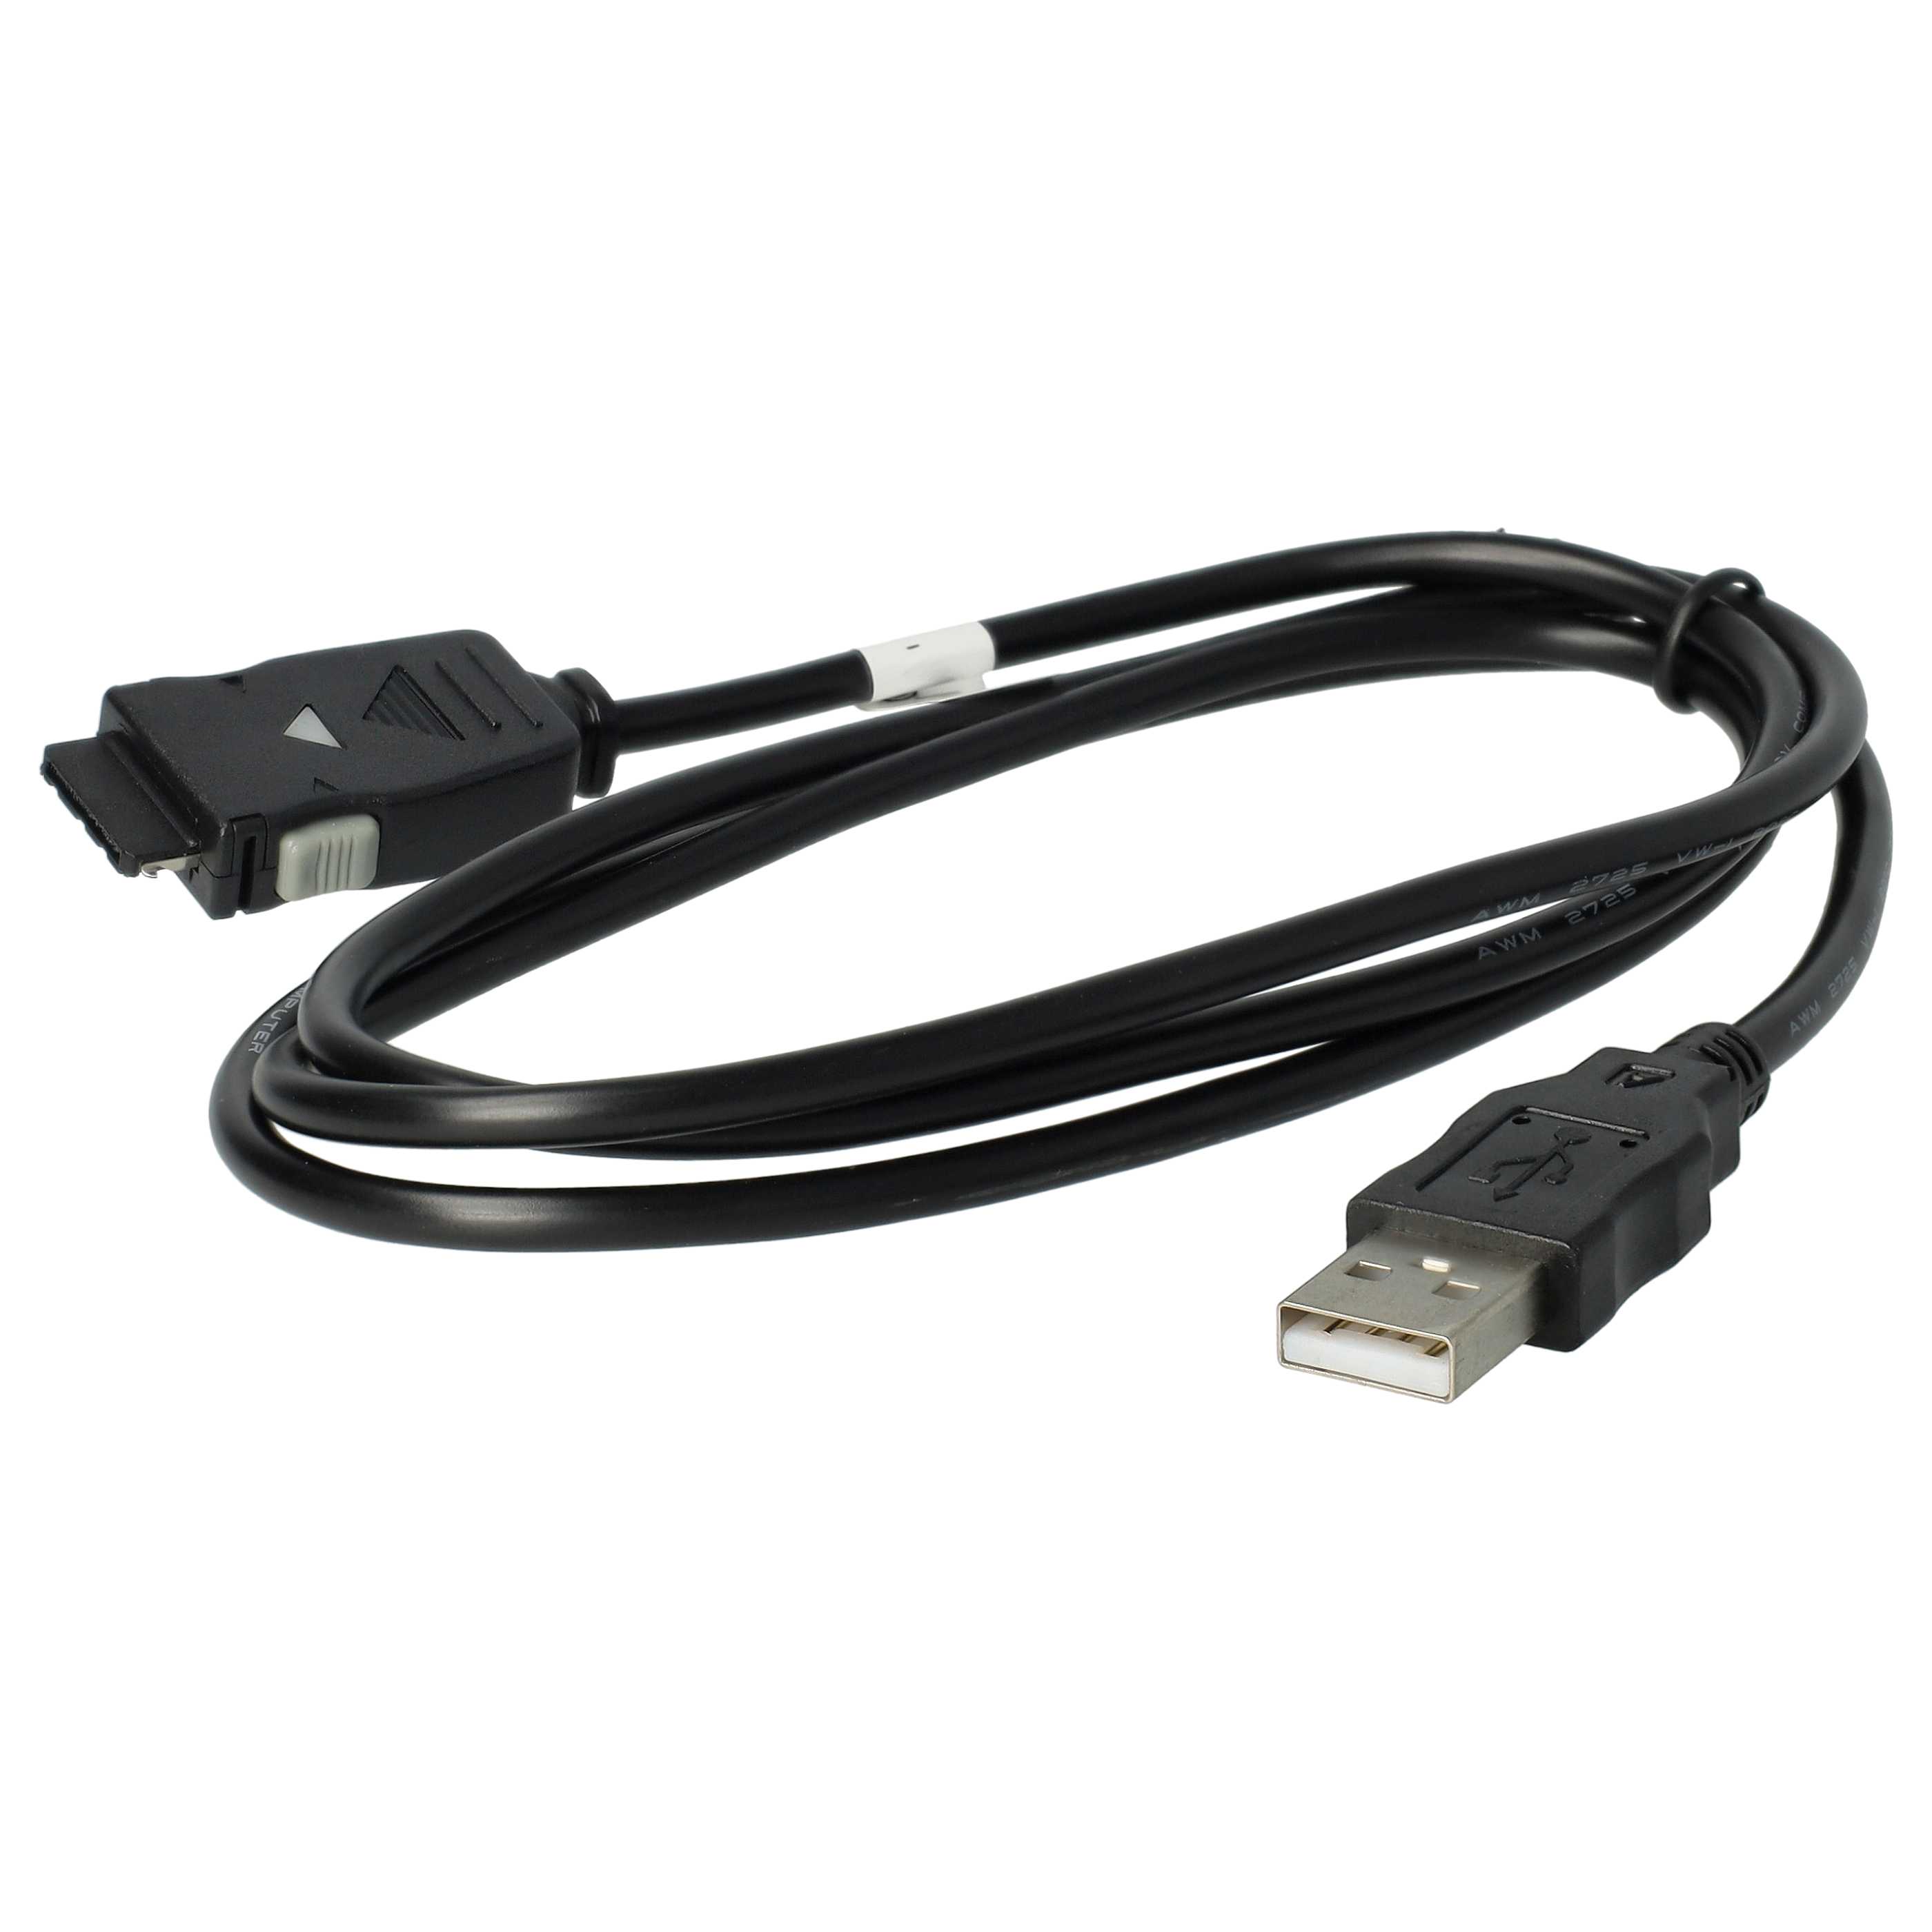 USB data cable suitable for SGH-Z140 Samsung SGH-Z140 phone, 100cm